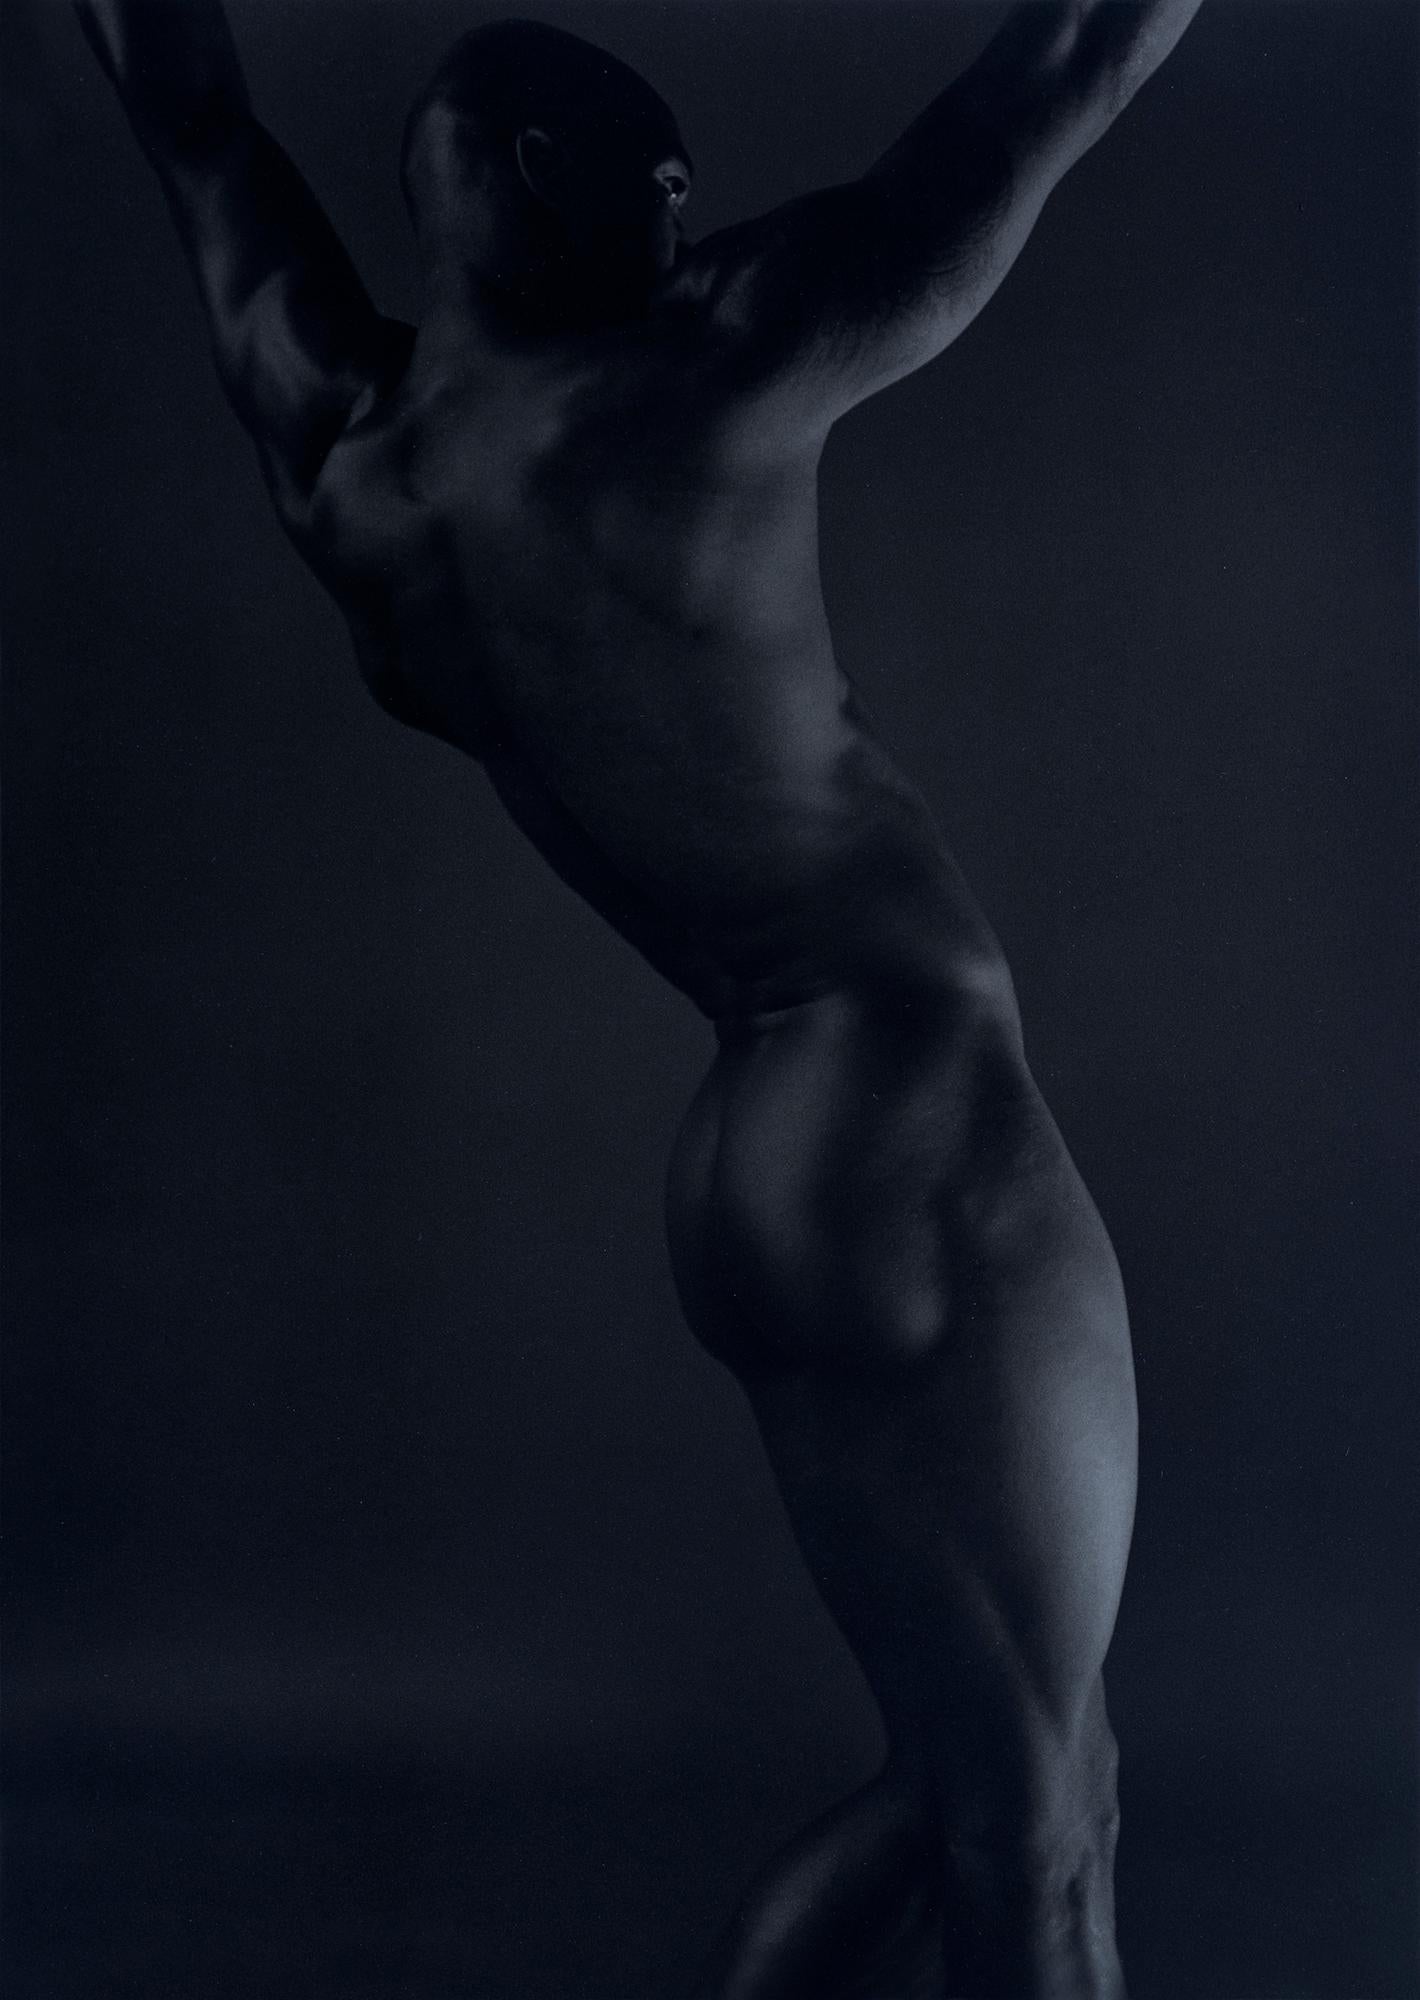 John Casado Nude Photograph - Untitled 20252 - lith silver gelatin print